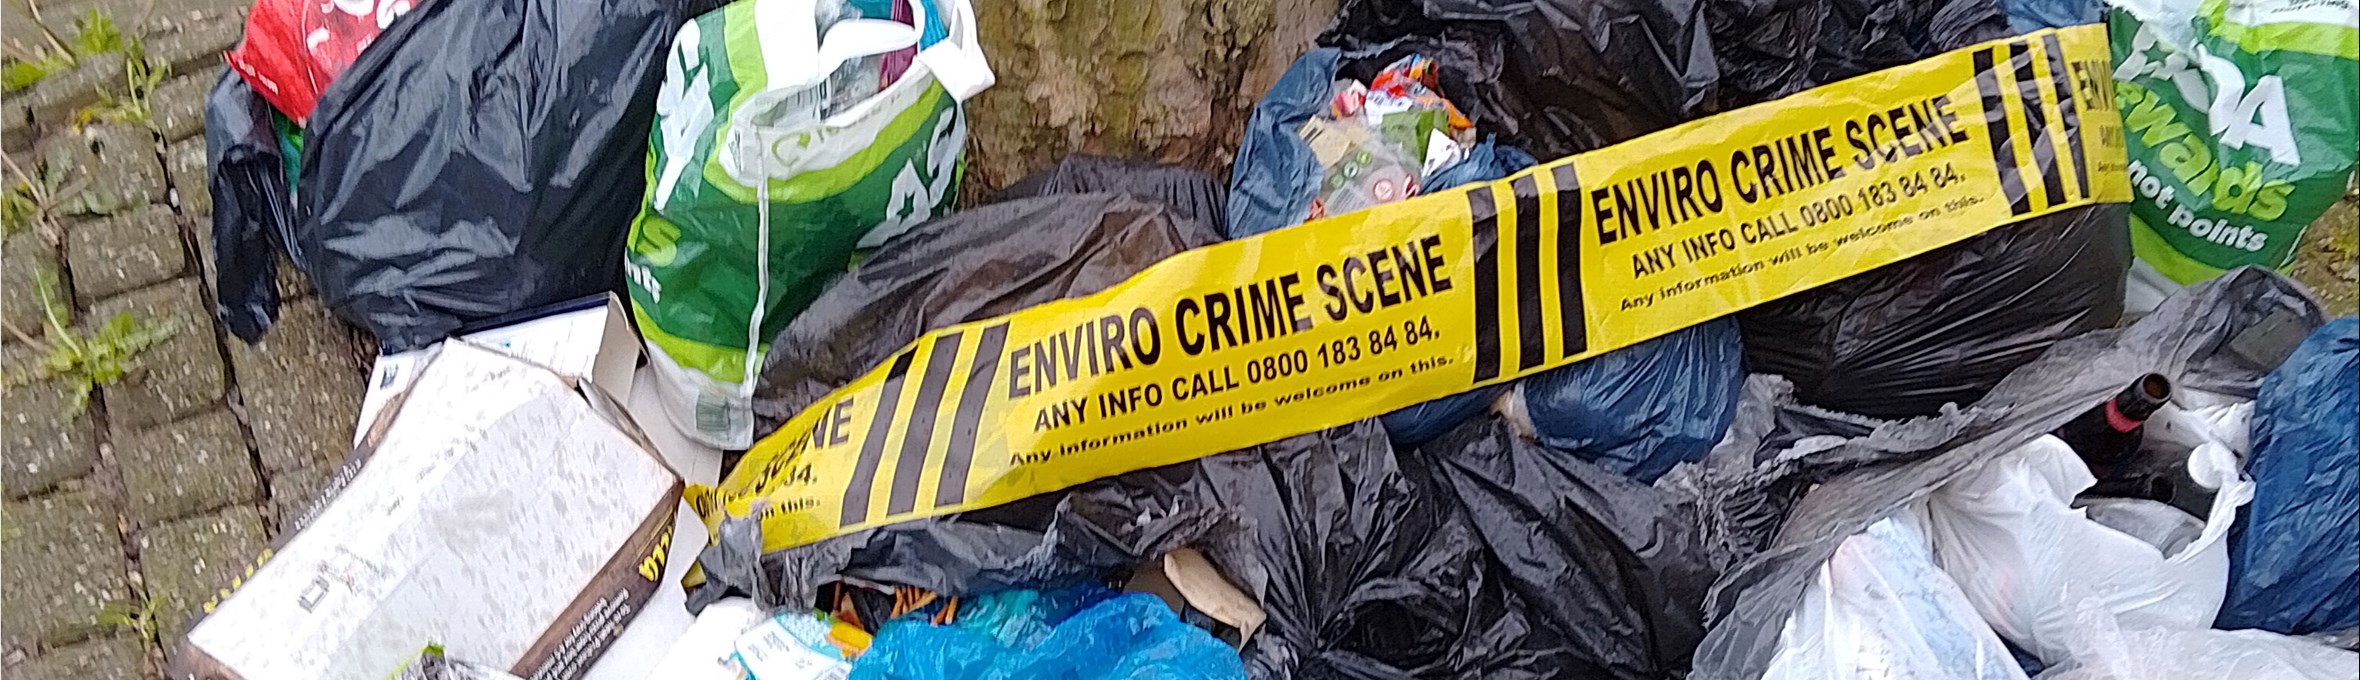 Bags of waste illegally dumped in an Ashfield street 